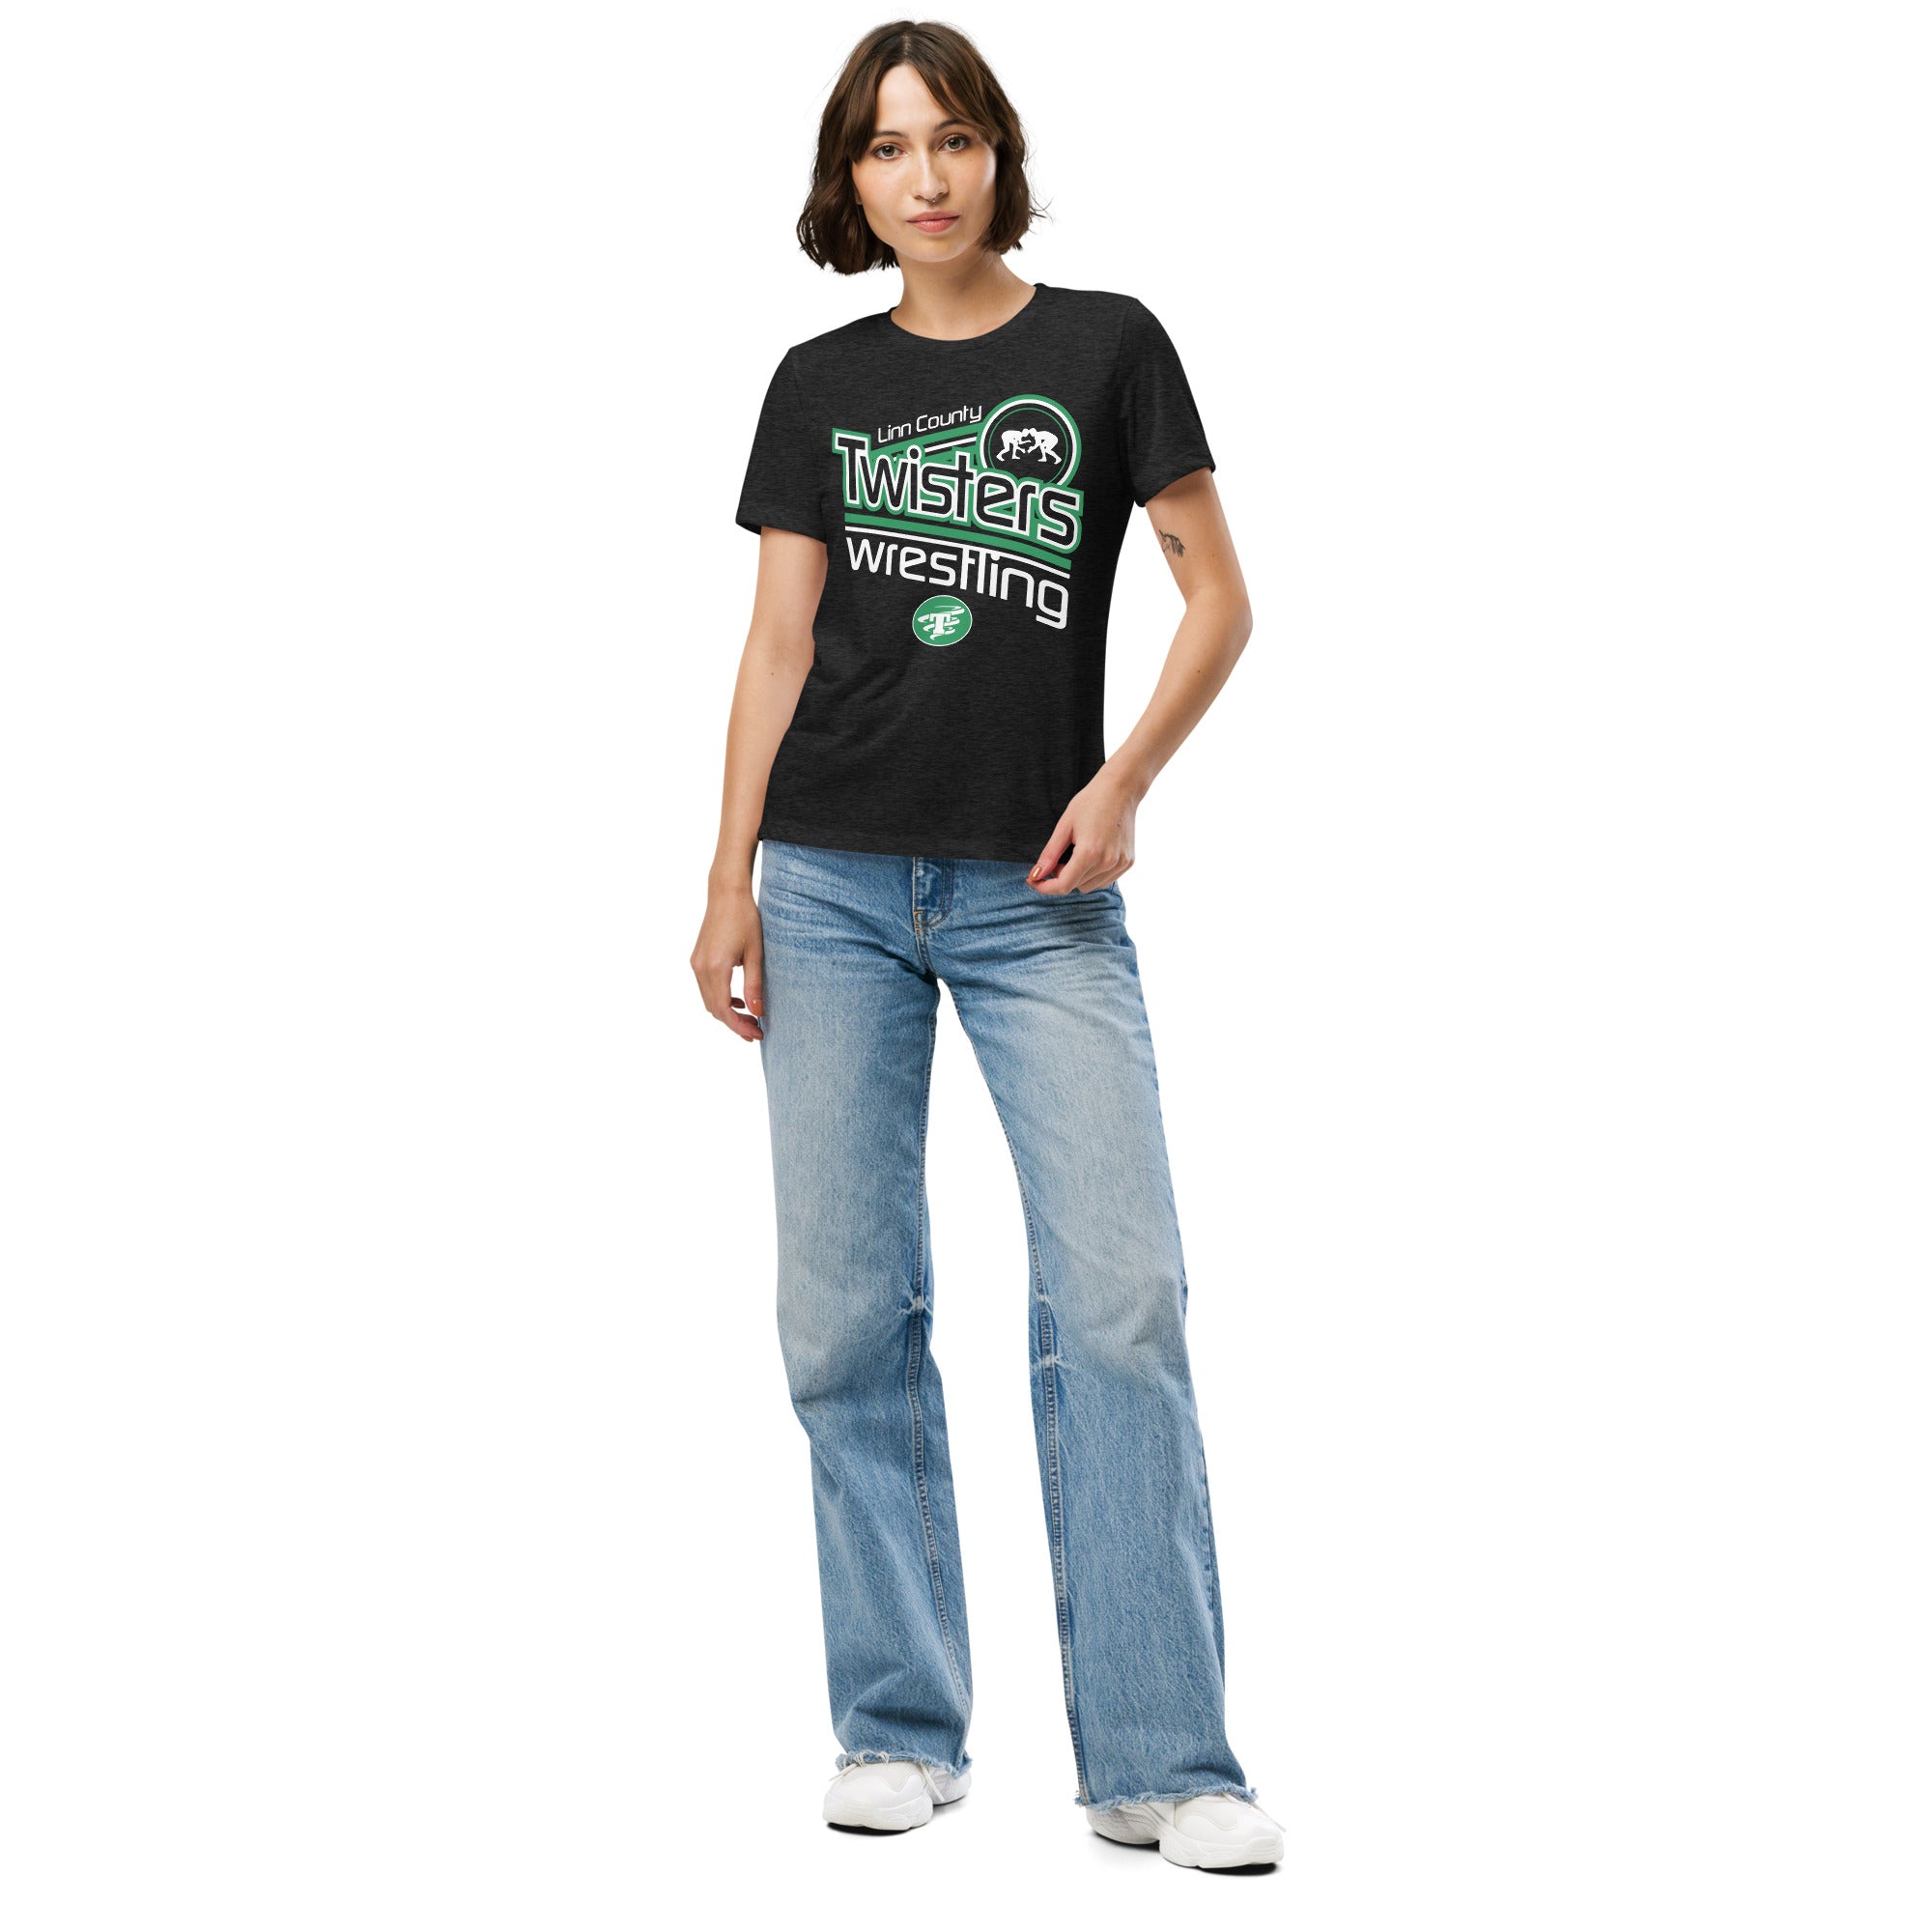 Linn County Twisters Women’s relaxed tri-blend t-shirt